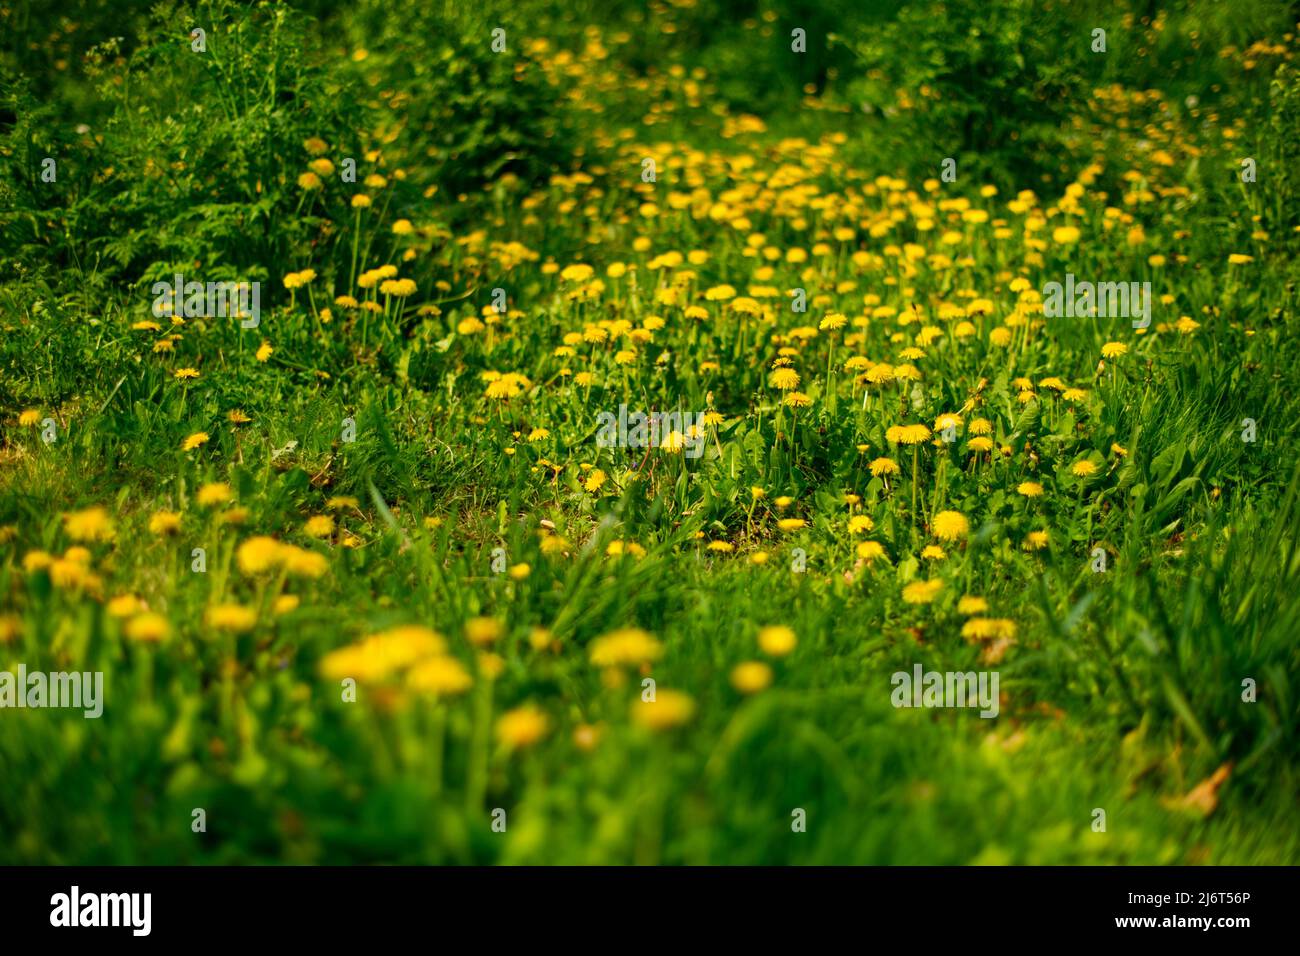 green meadow with a field of yellow dandelions (hawkbit, taraxacum) Stock Photo